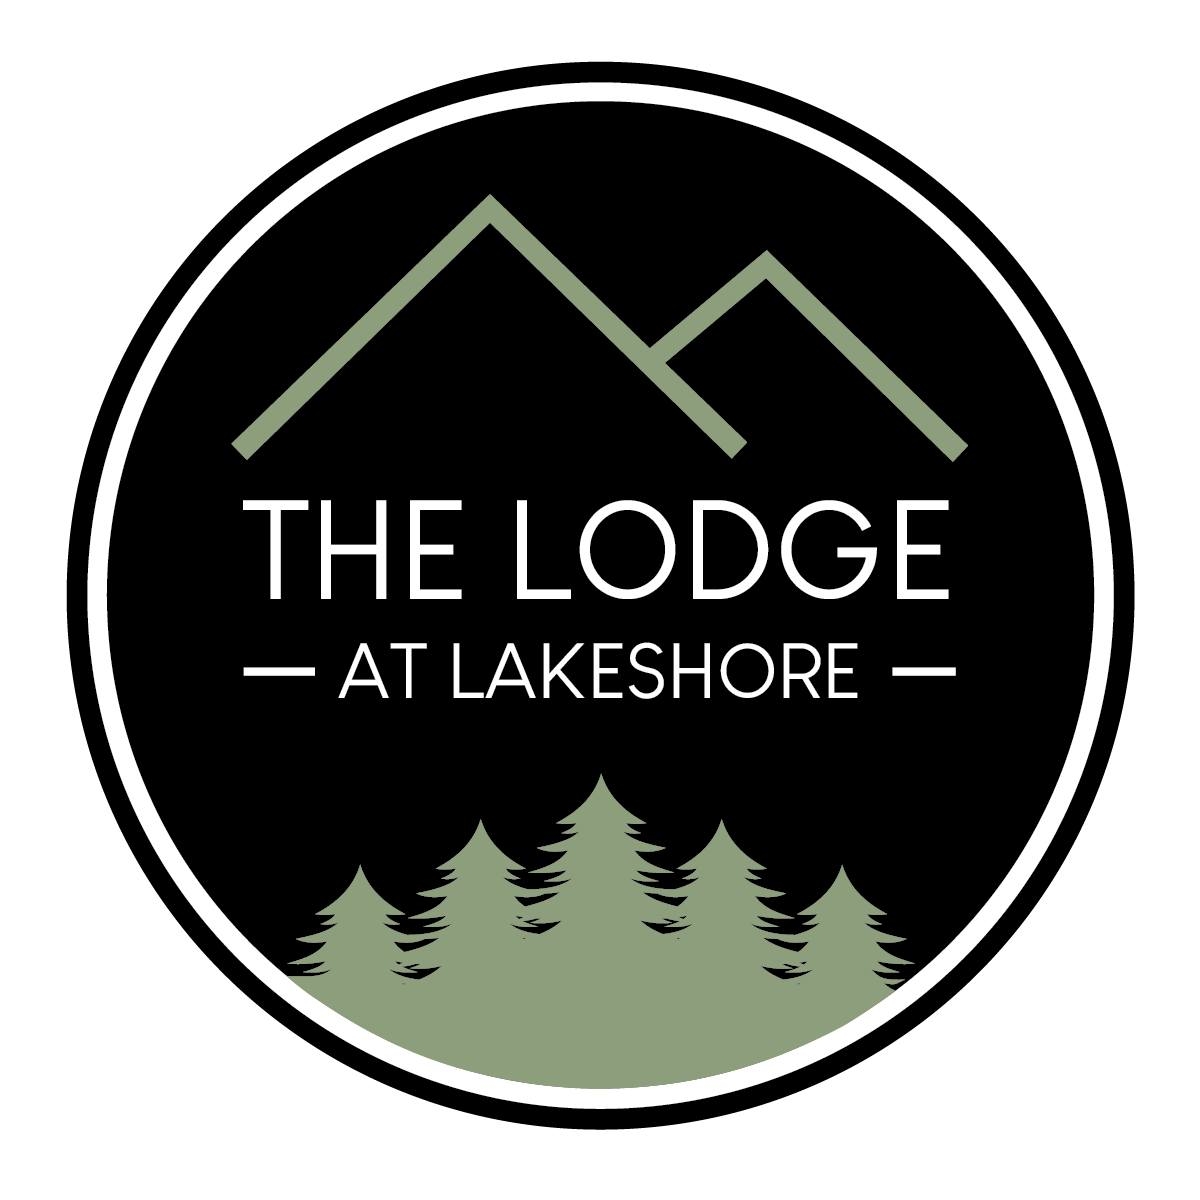 The Lodge at Lakeshore